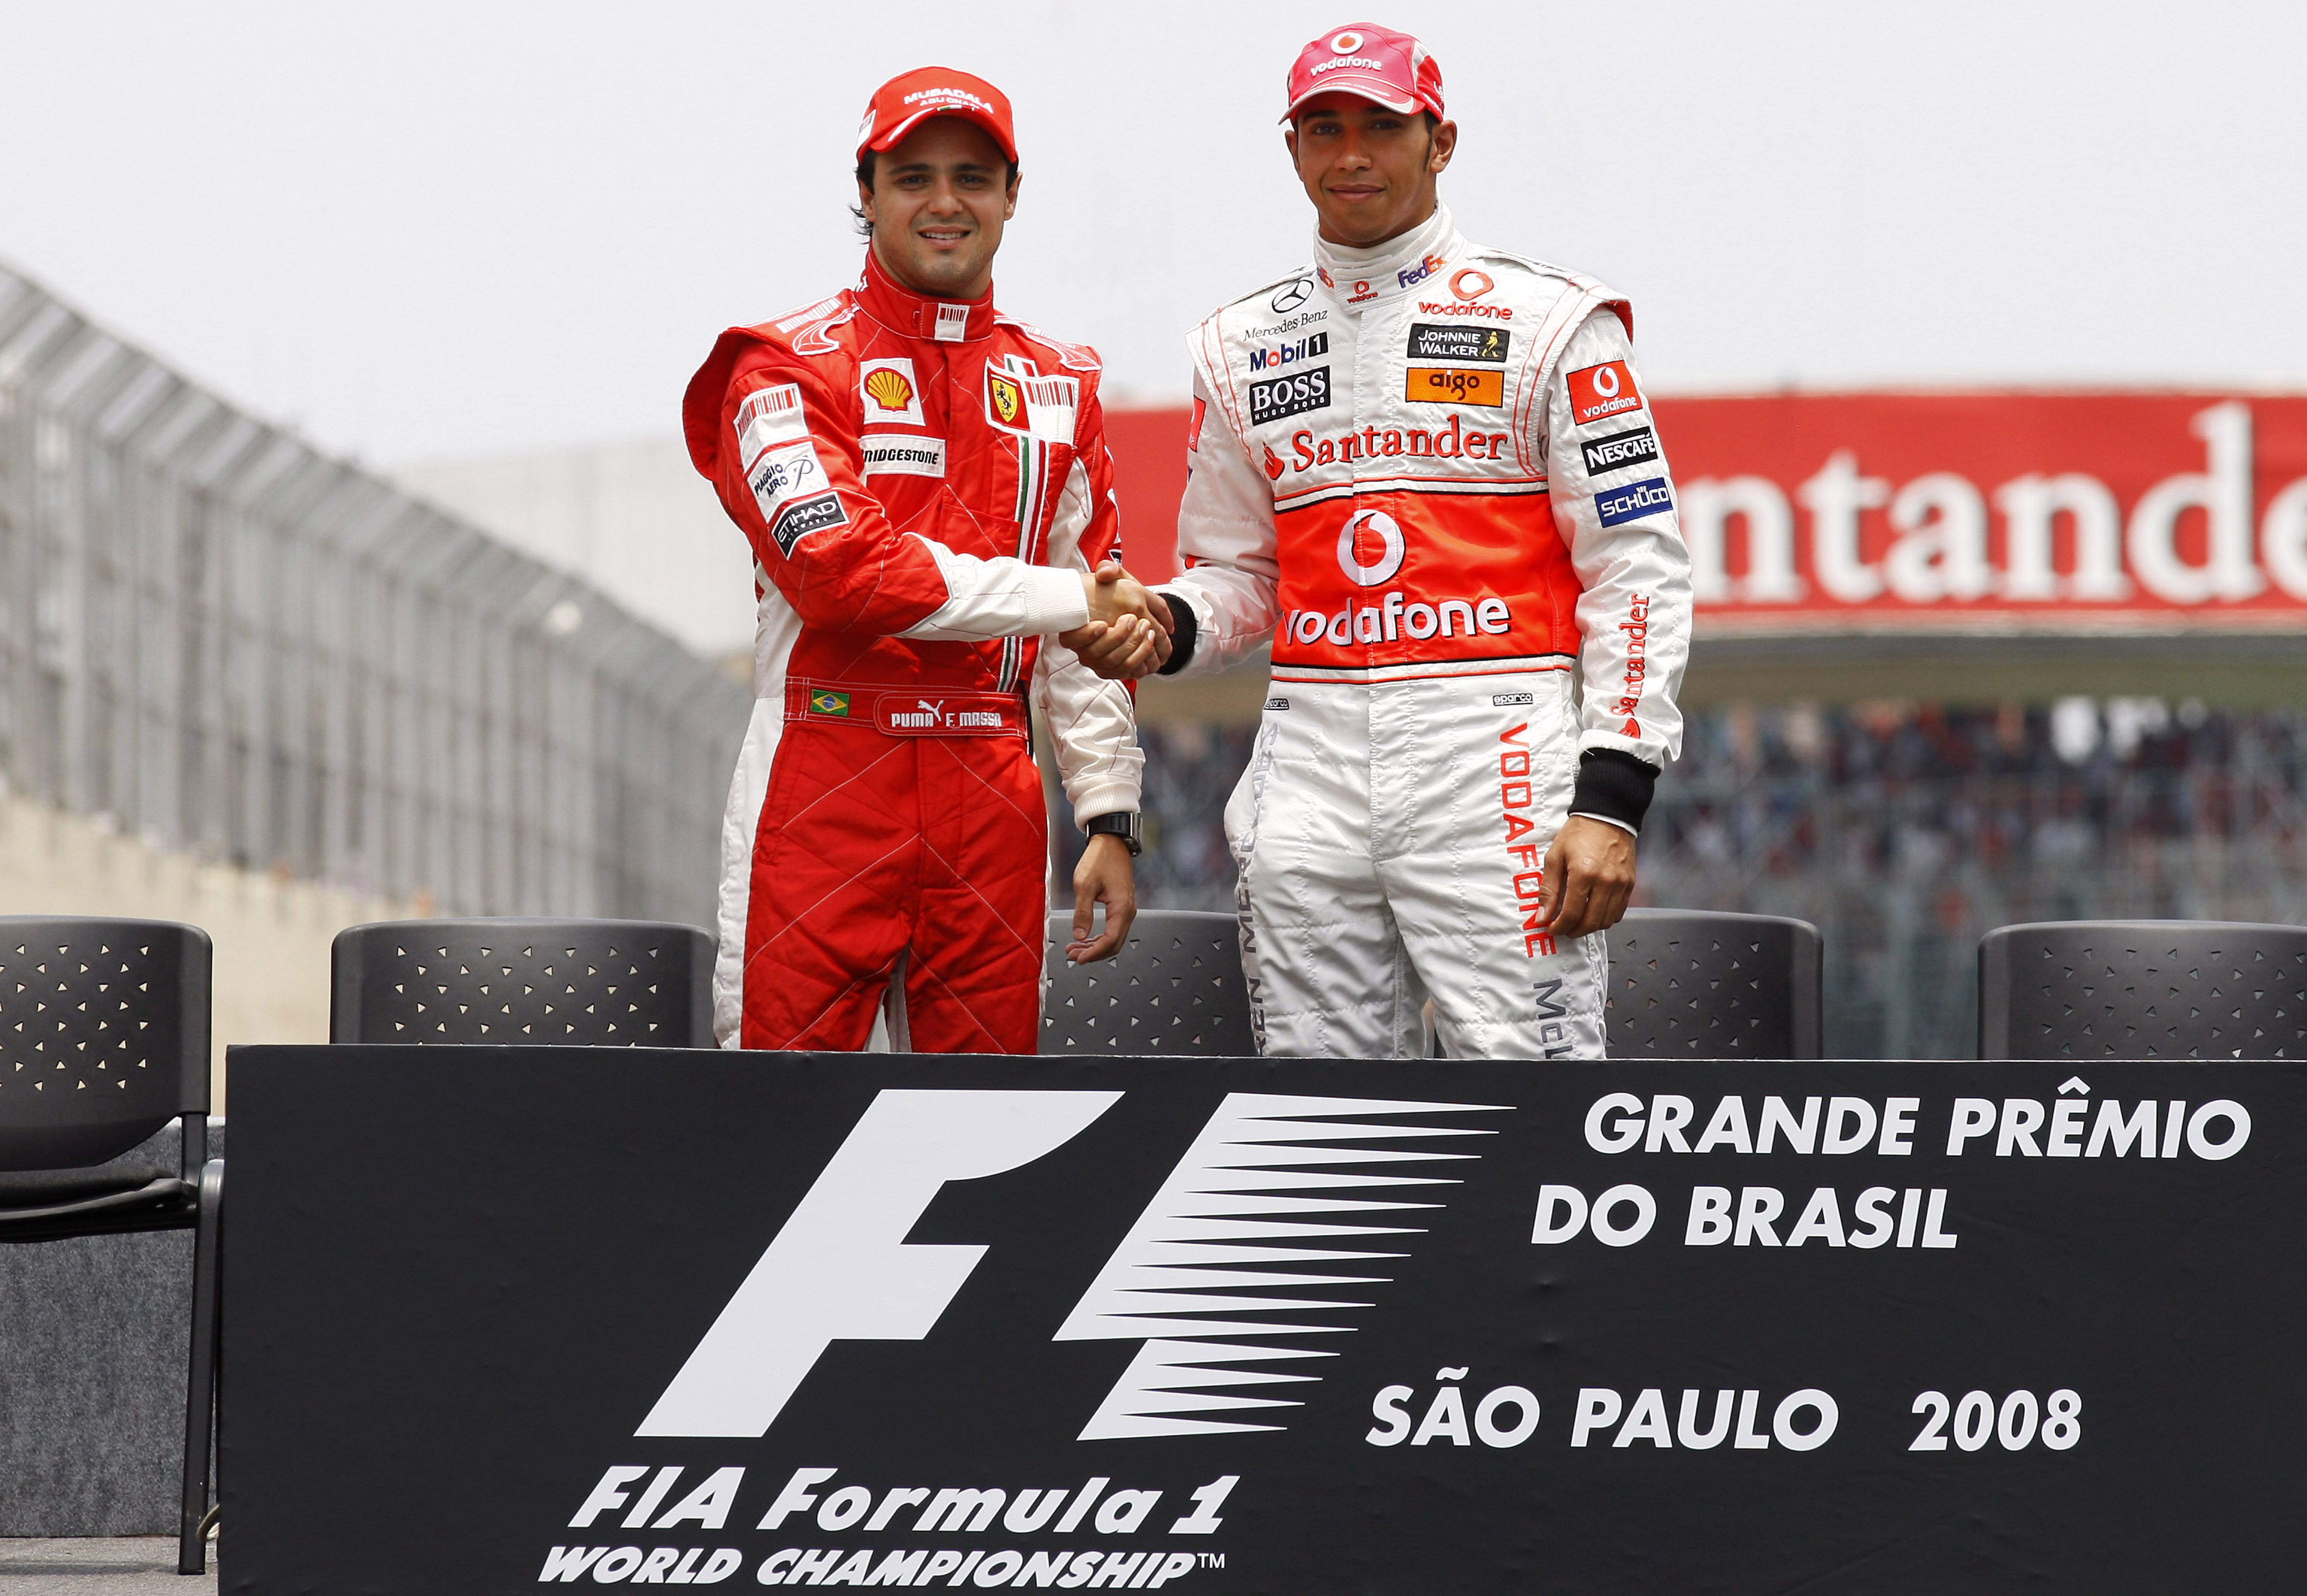 Motorsports: FIA Formula One World Championship 2012, Grand Prix